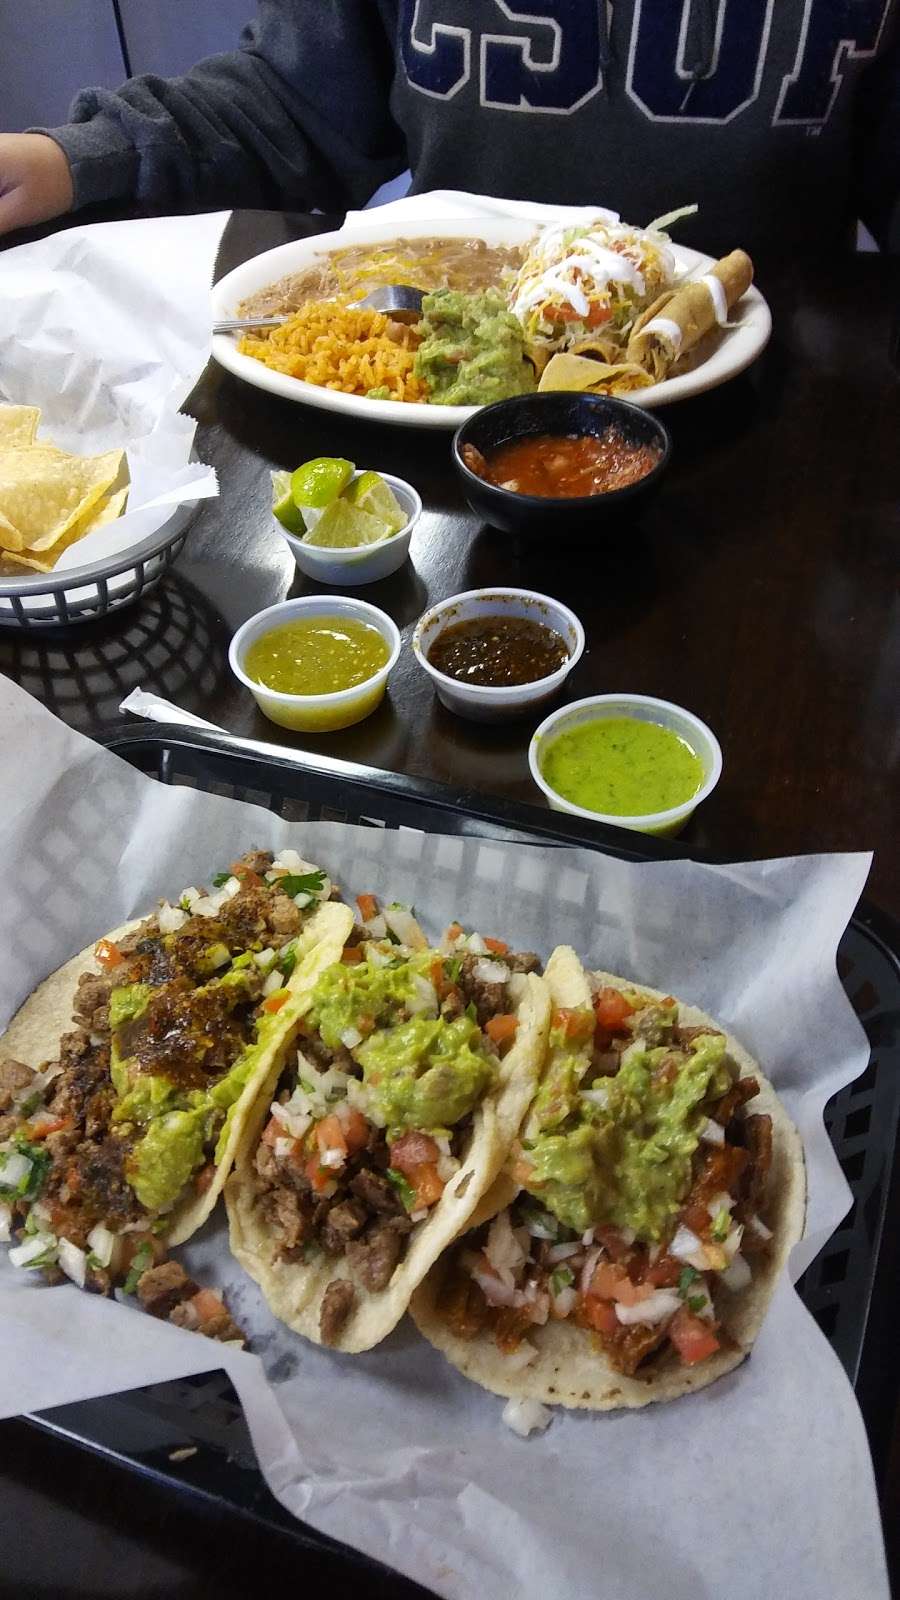 Don Panchos Mexican Food | 32475 Clinton Keith Rd, Wildomar, CA 92595, USA | Phone: (951) 678-9370